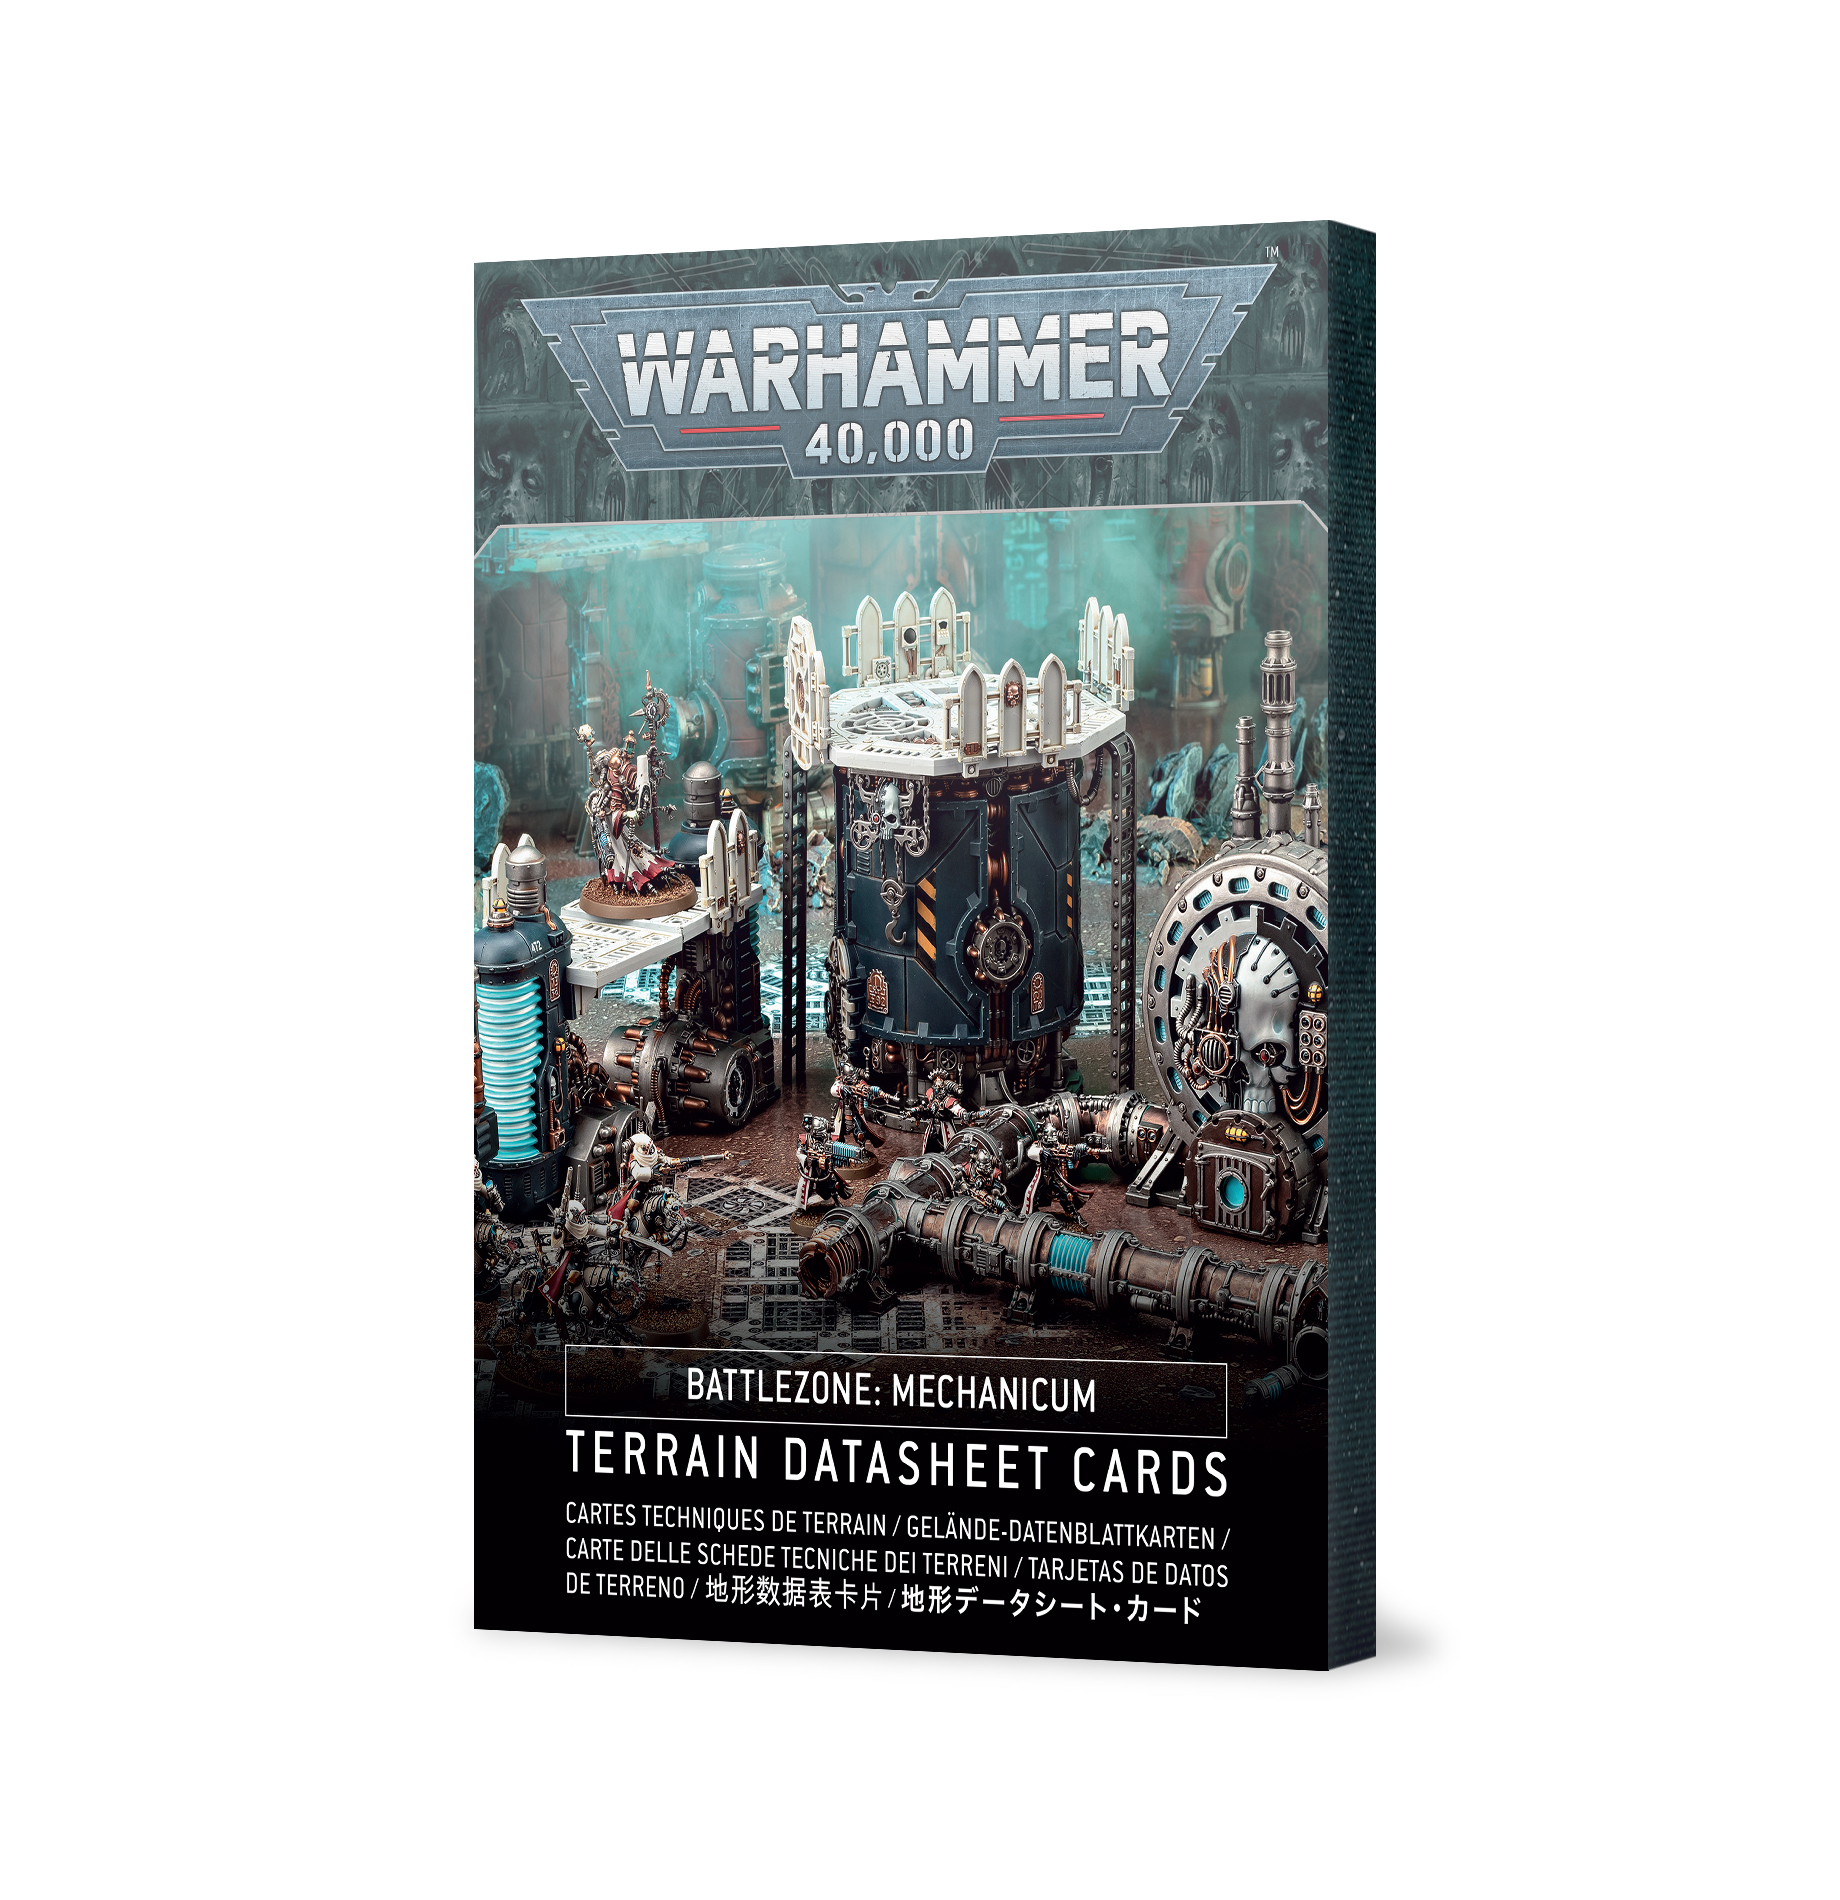 Warhammer 40,000: Battlezone Mechanicum: Terrain Datasheet Cards 